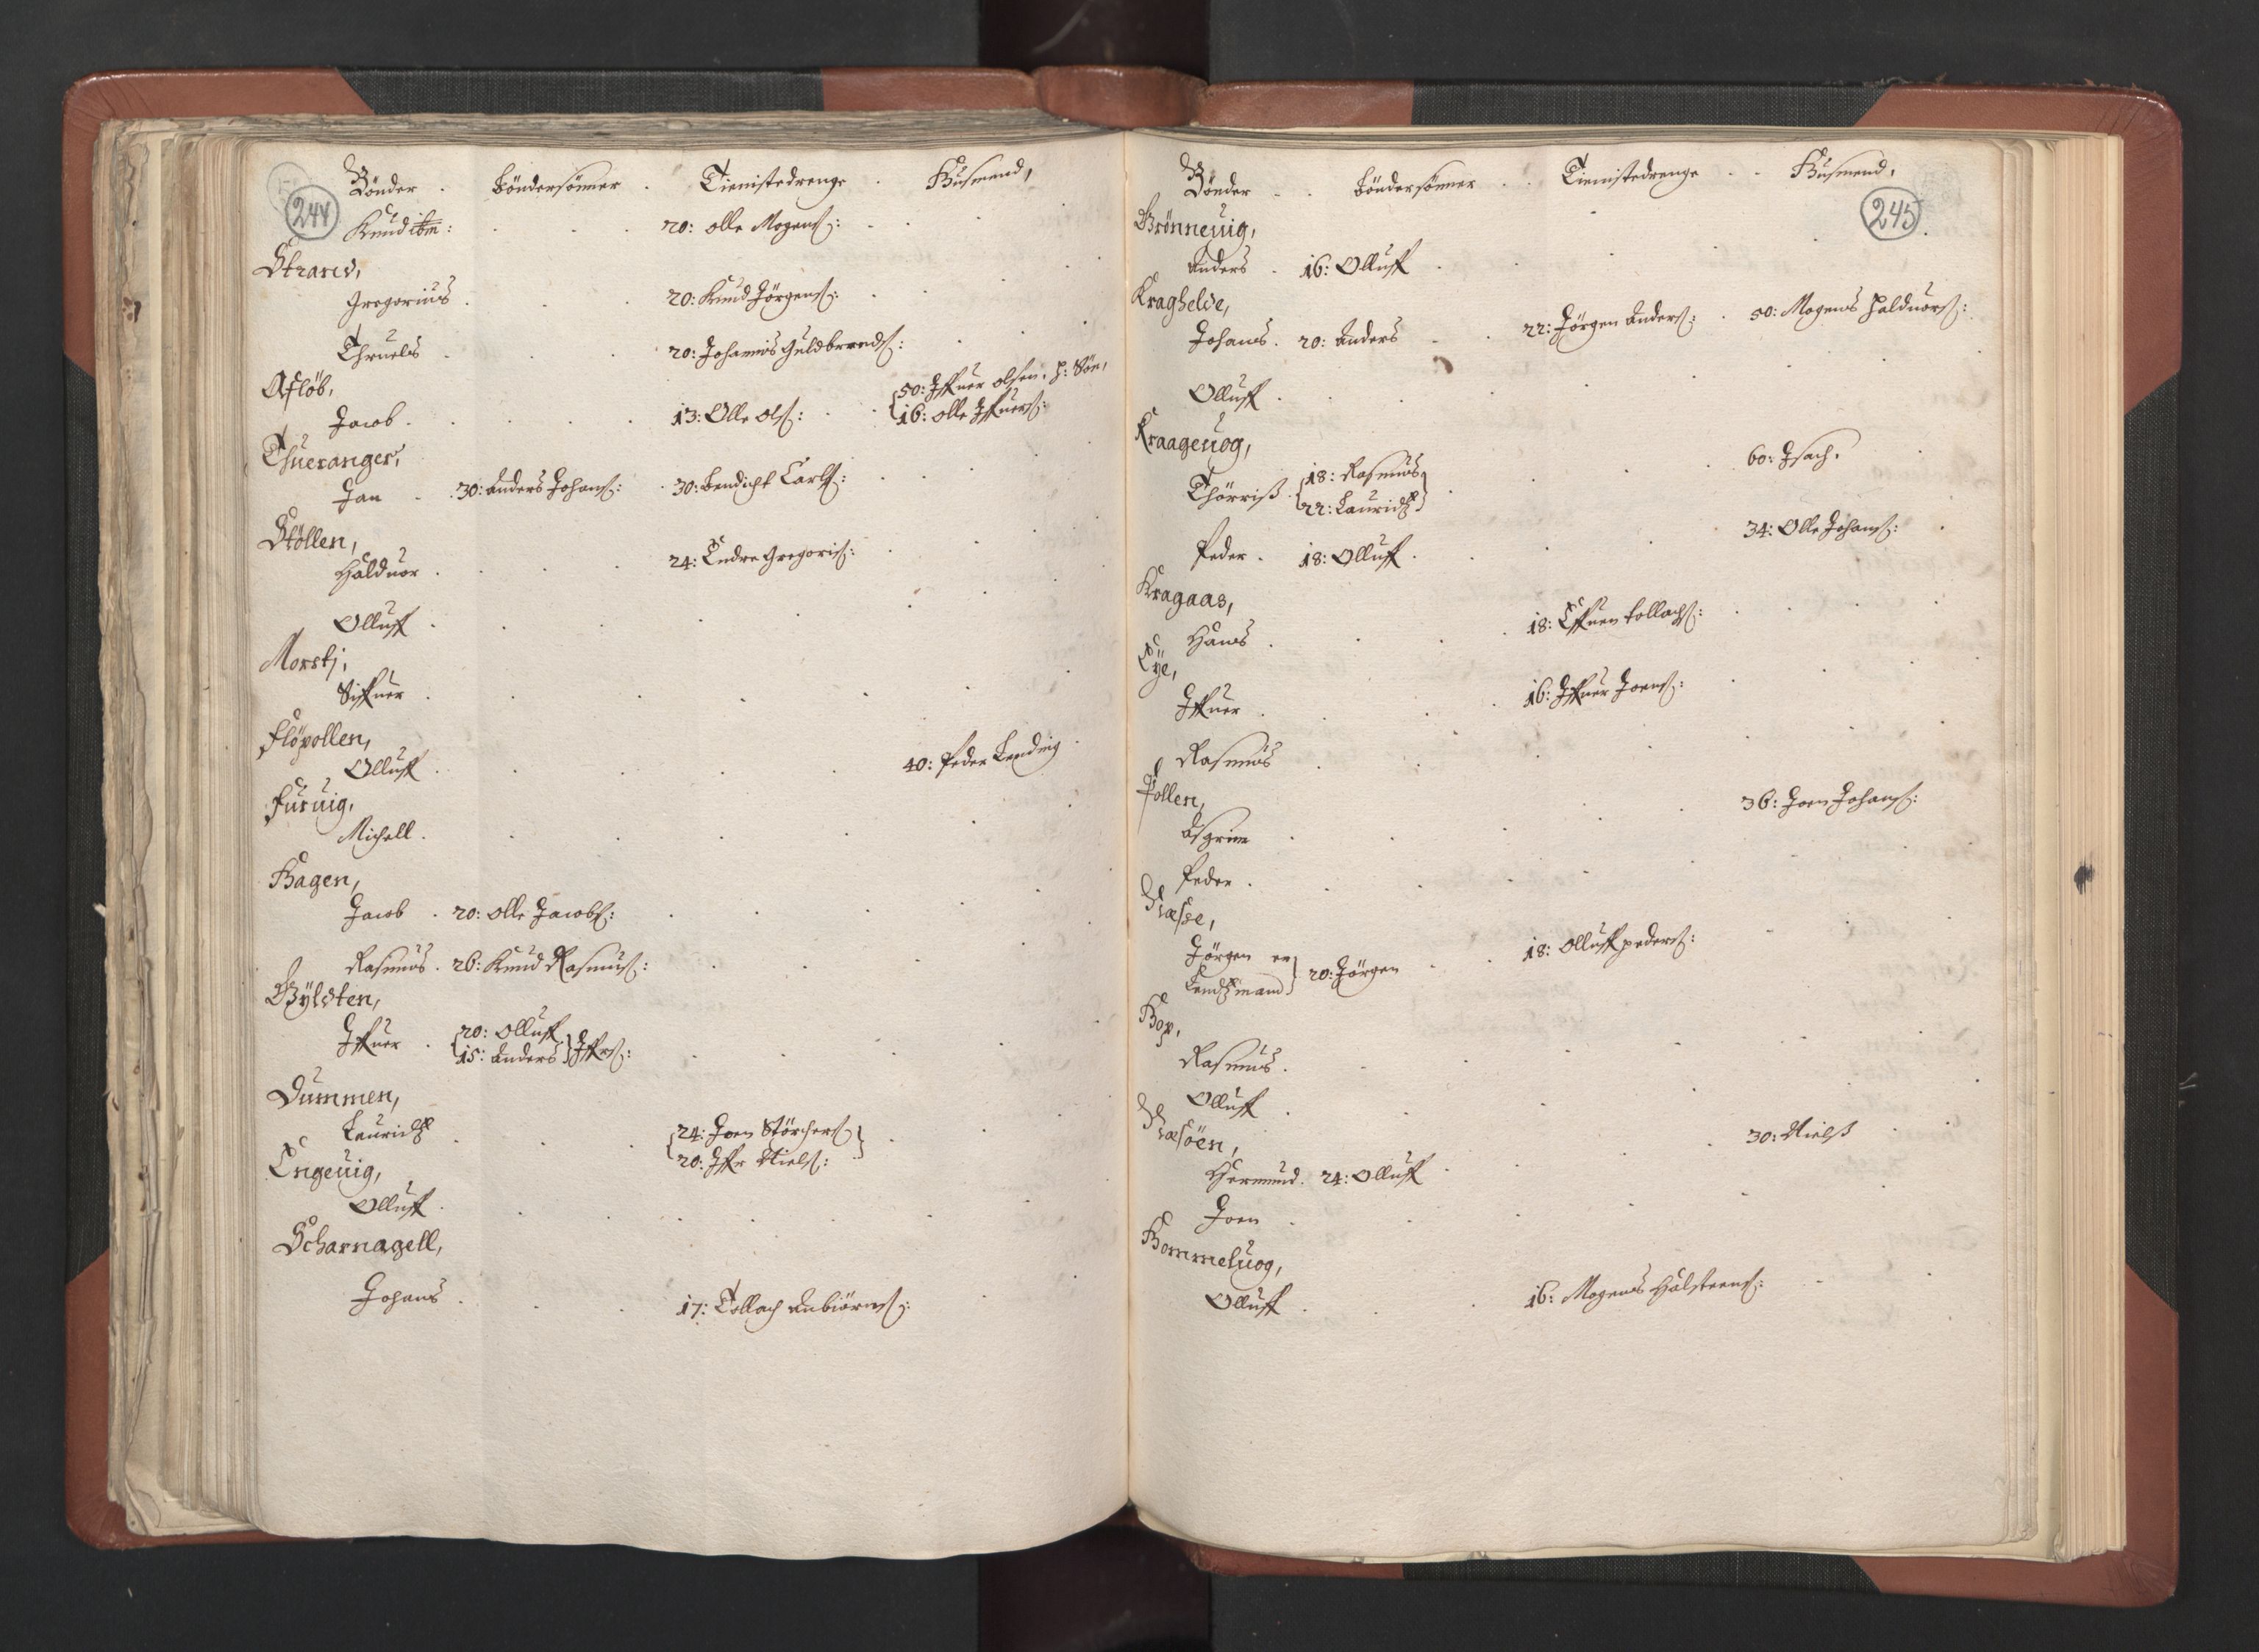 RA, Fogdenes og sorenskrivernes manntall 1664-1666, nr. 14: Hardanger len, Ytre Sogn fogderi og Indre Sogn fogderi, 1664-1665, s. 244-245